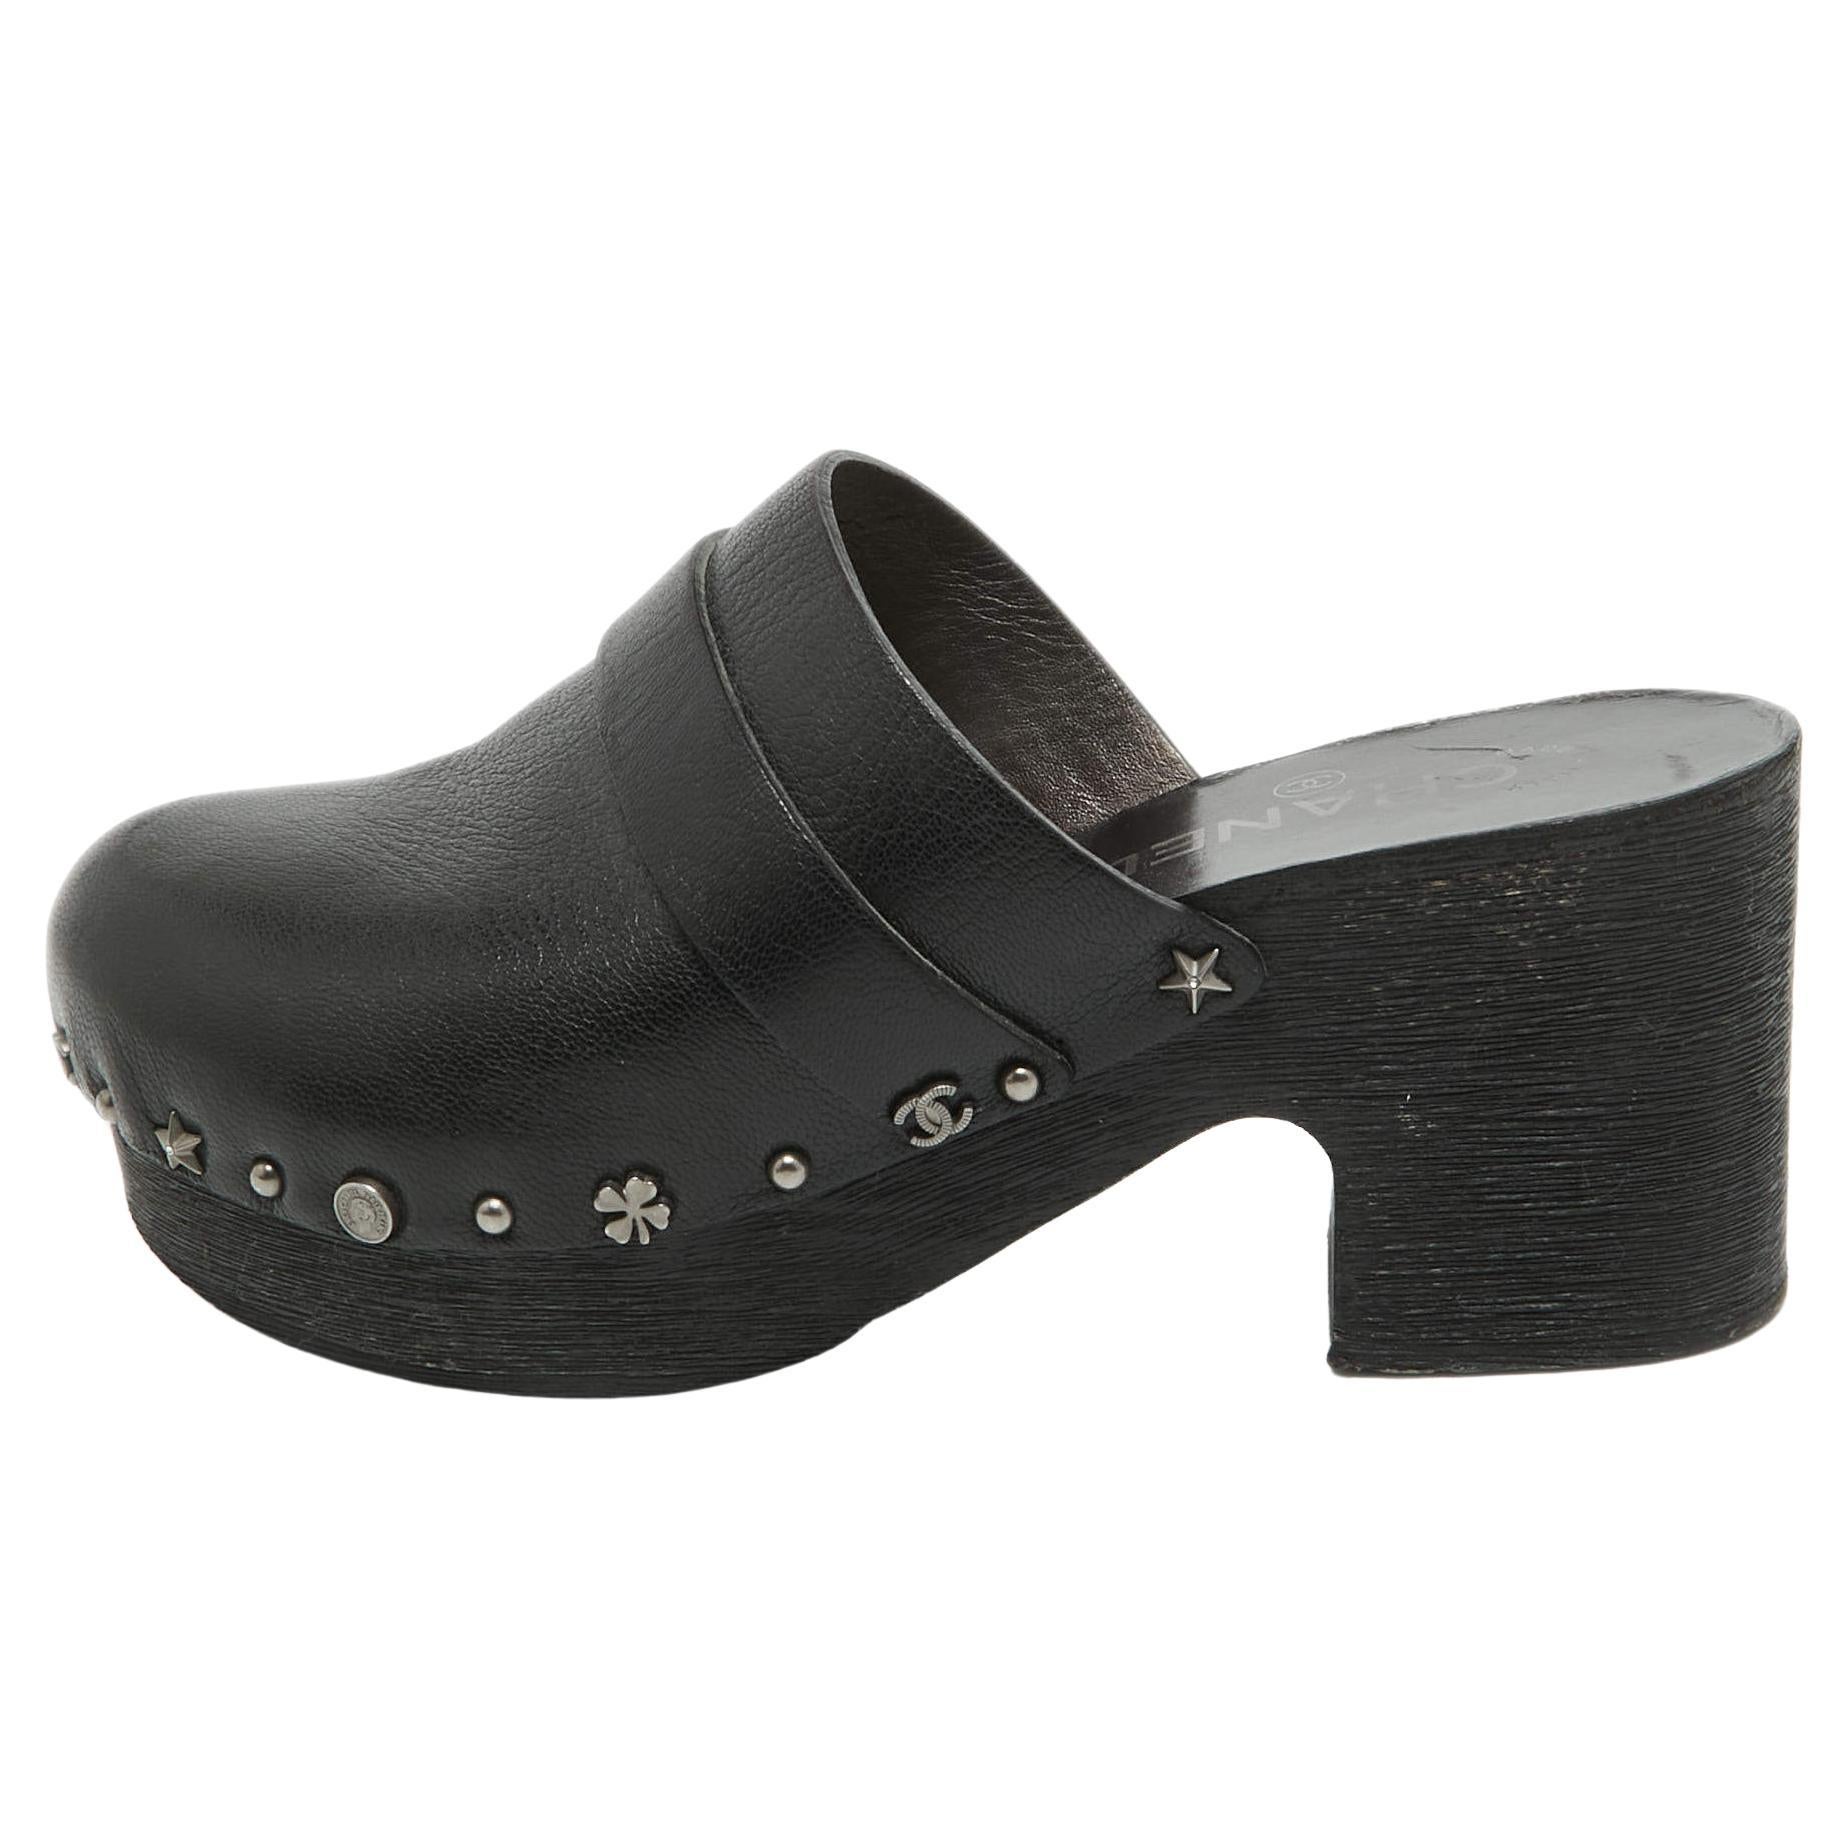 Chanel Black Leather Studded Platform Clogs Size 37